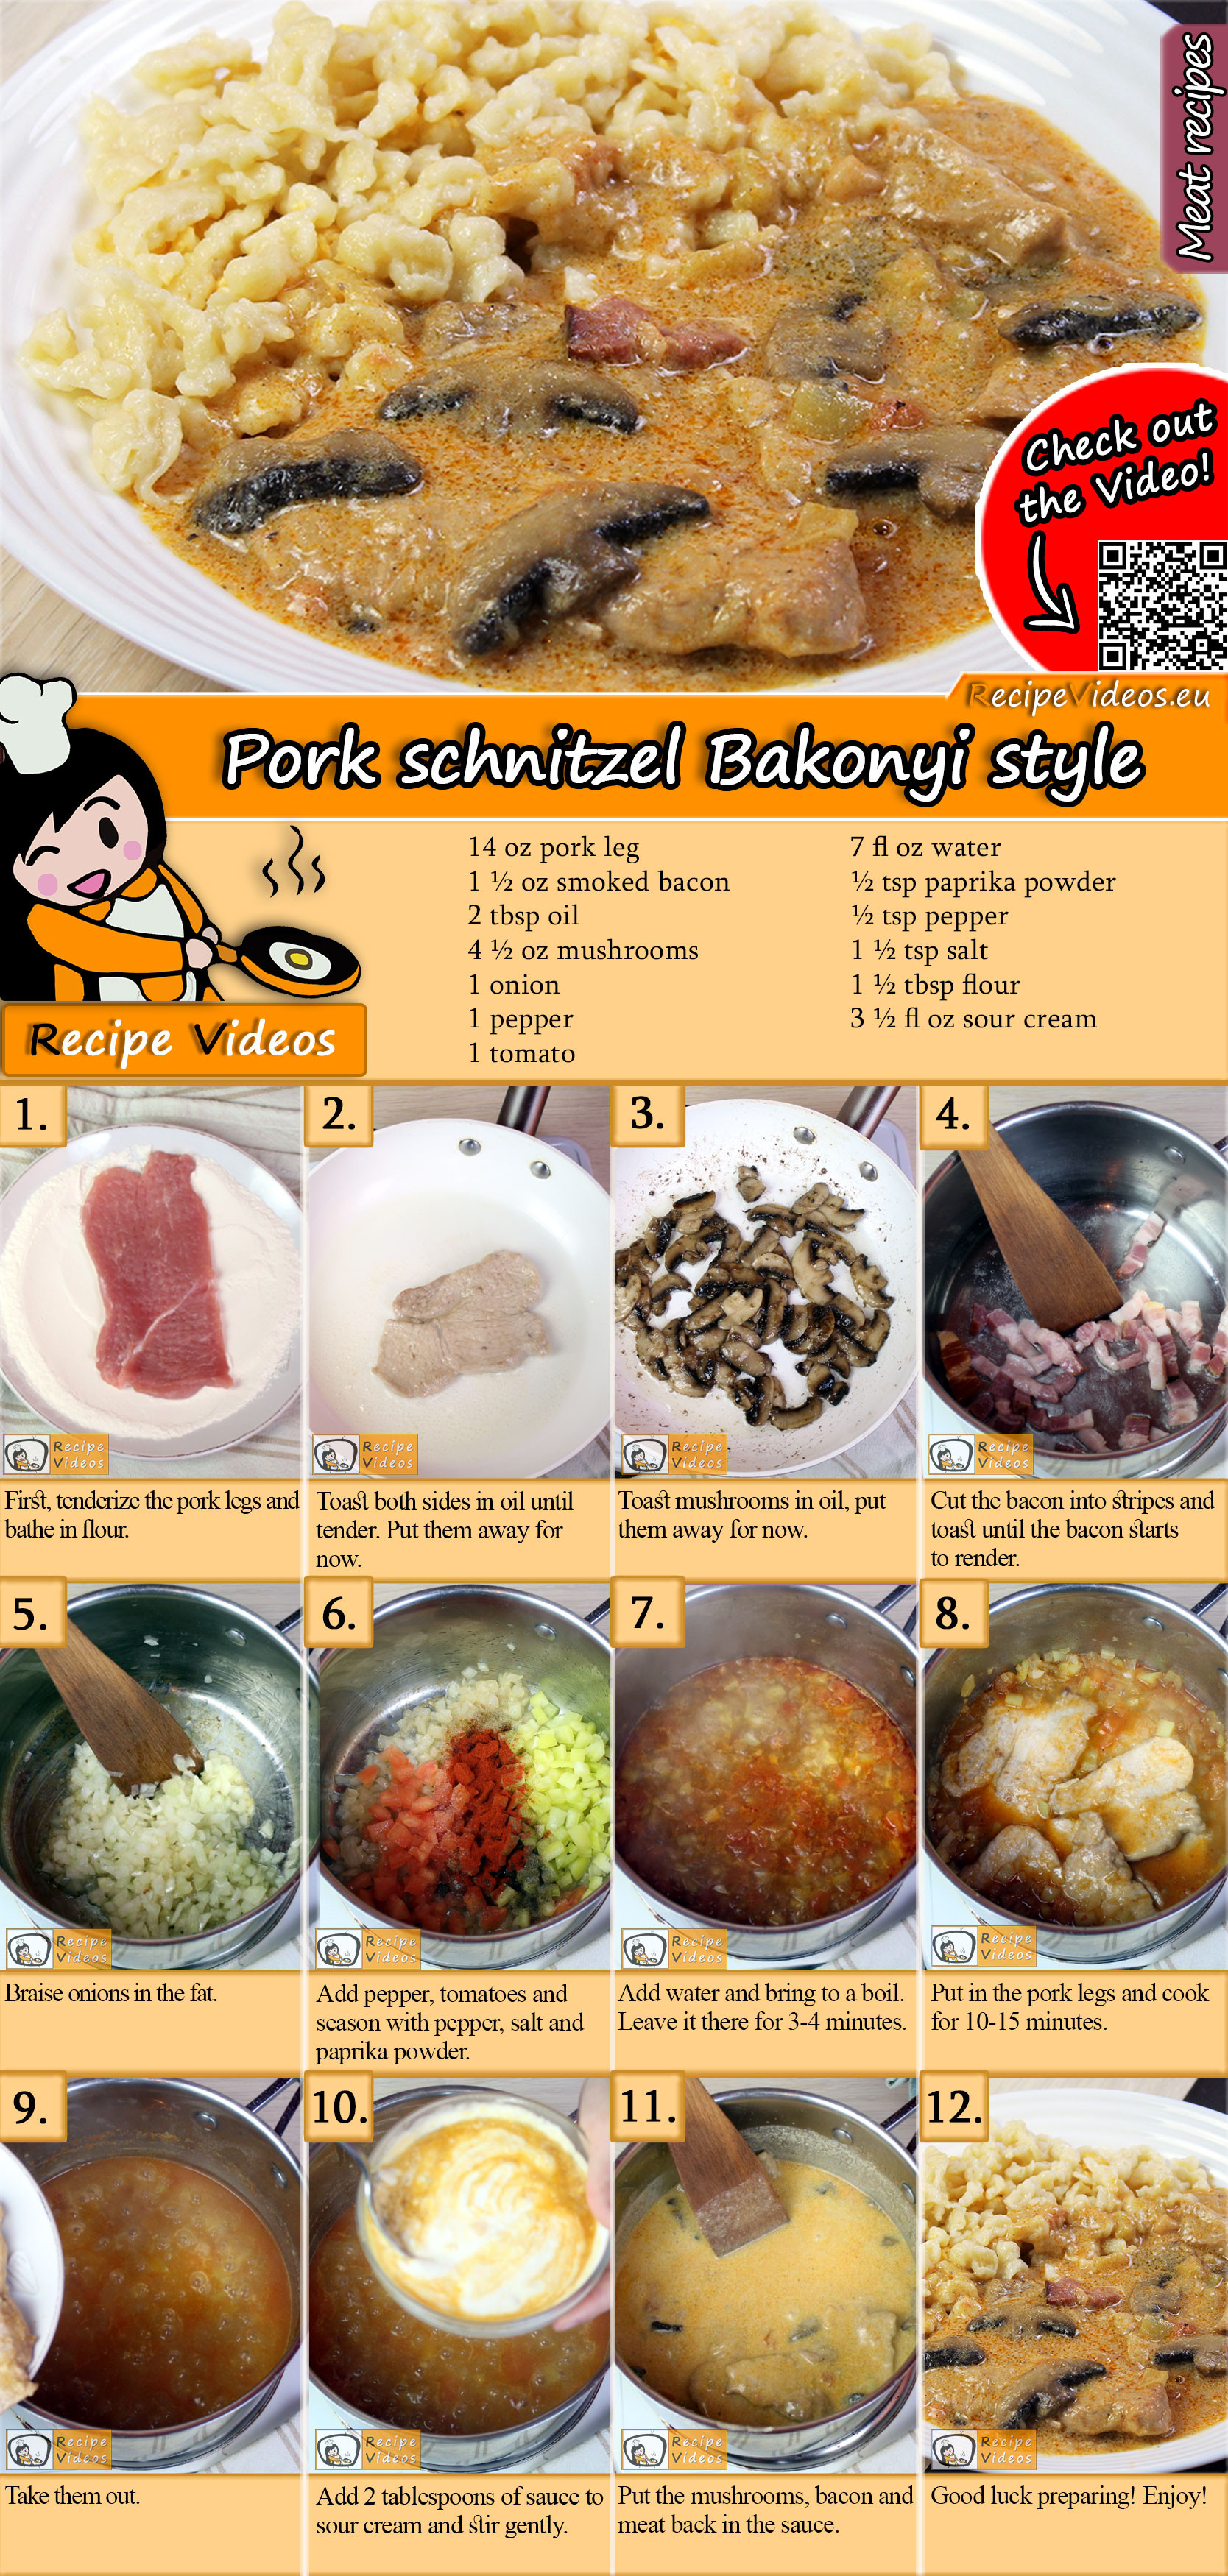 Pork schnitzel Bakonyi style recipe with video